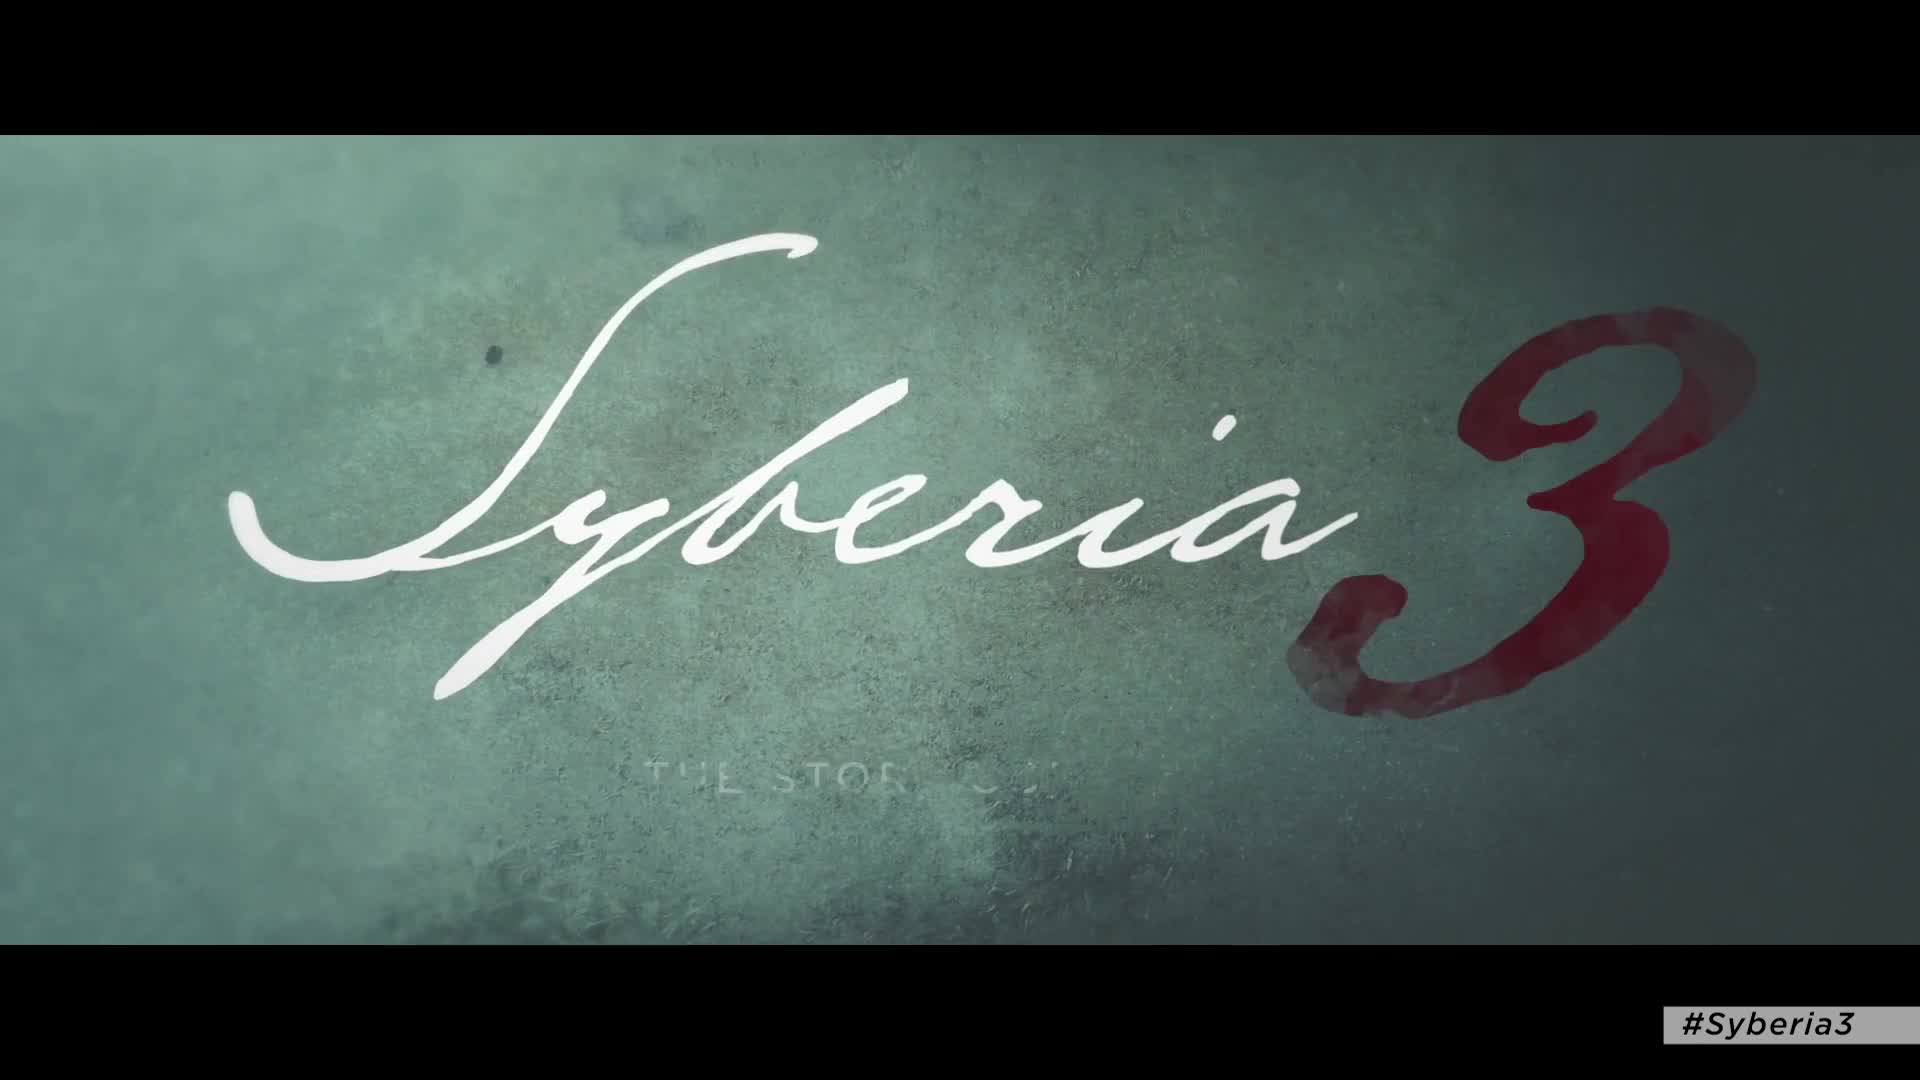 Syberia 3 - Story Continues - developer video